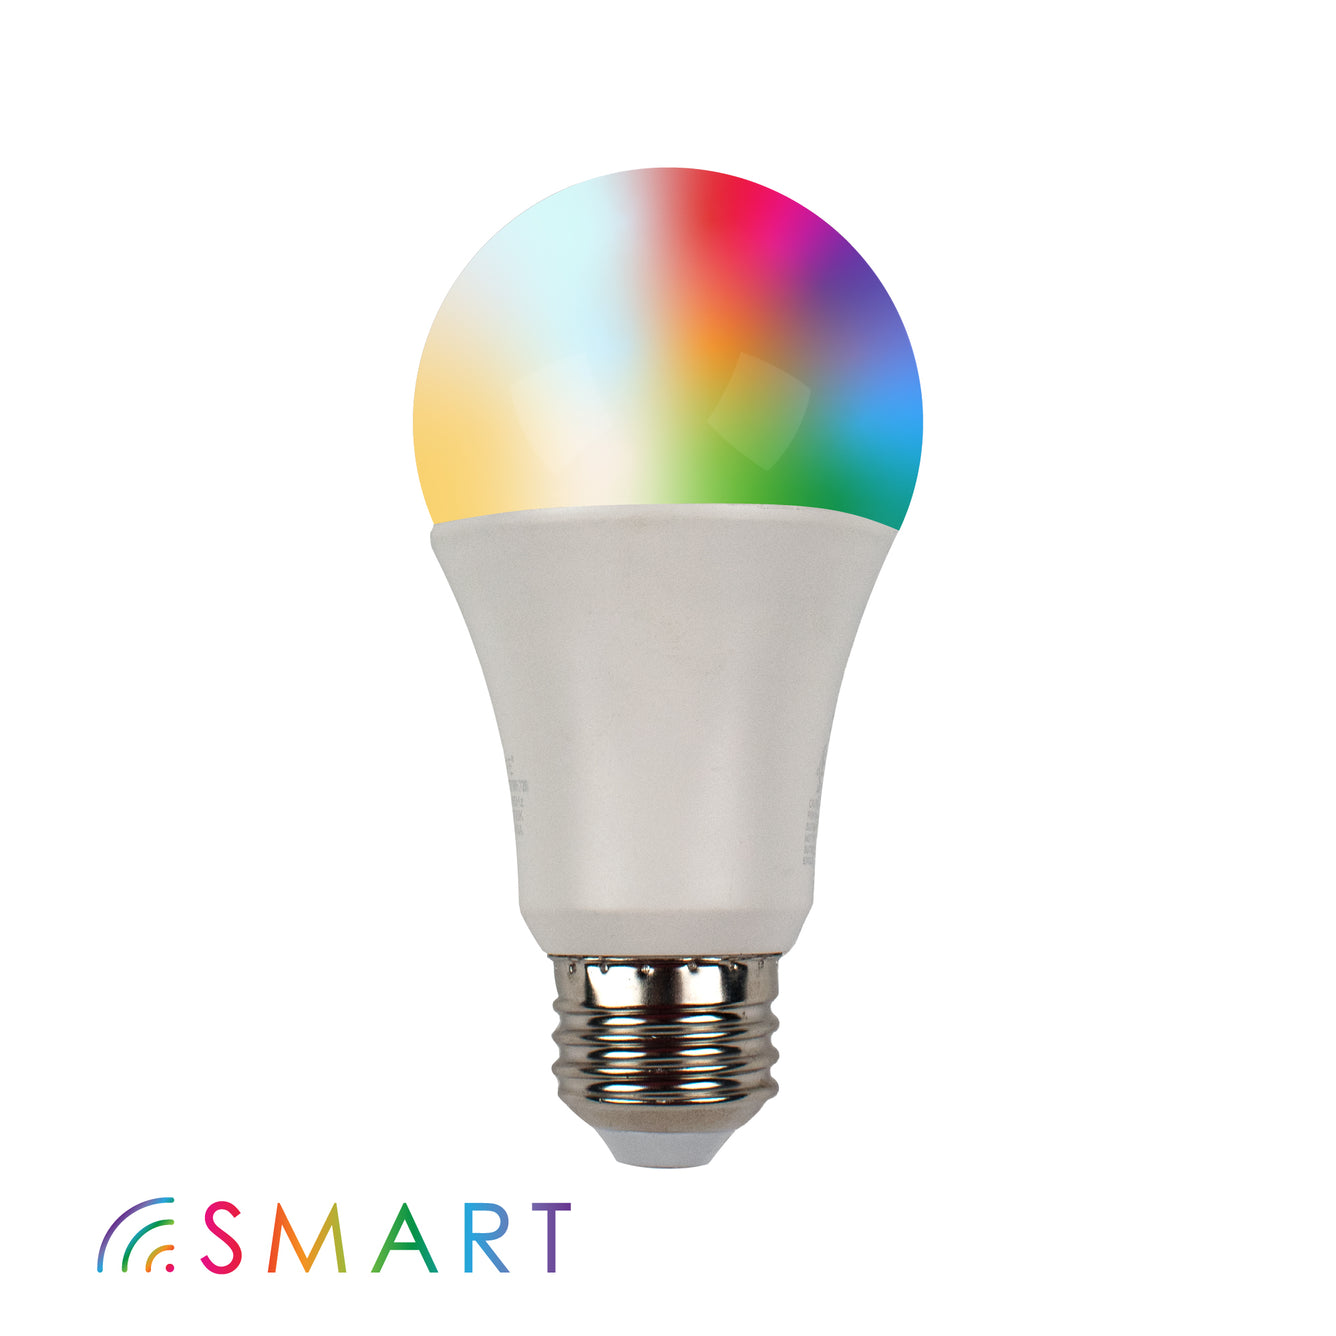 CLEANLIFE® Smart A19 LED Light Bulb - RGB+Tunable White, WiFi + Bluetooth